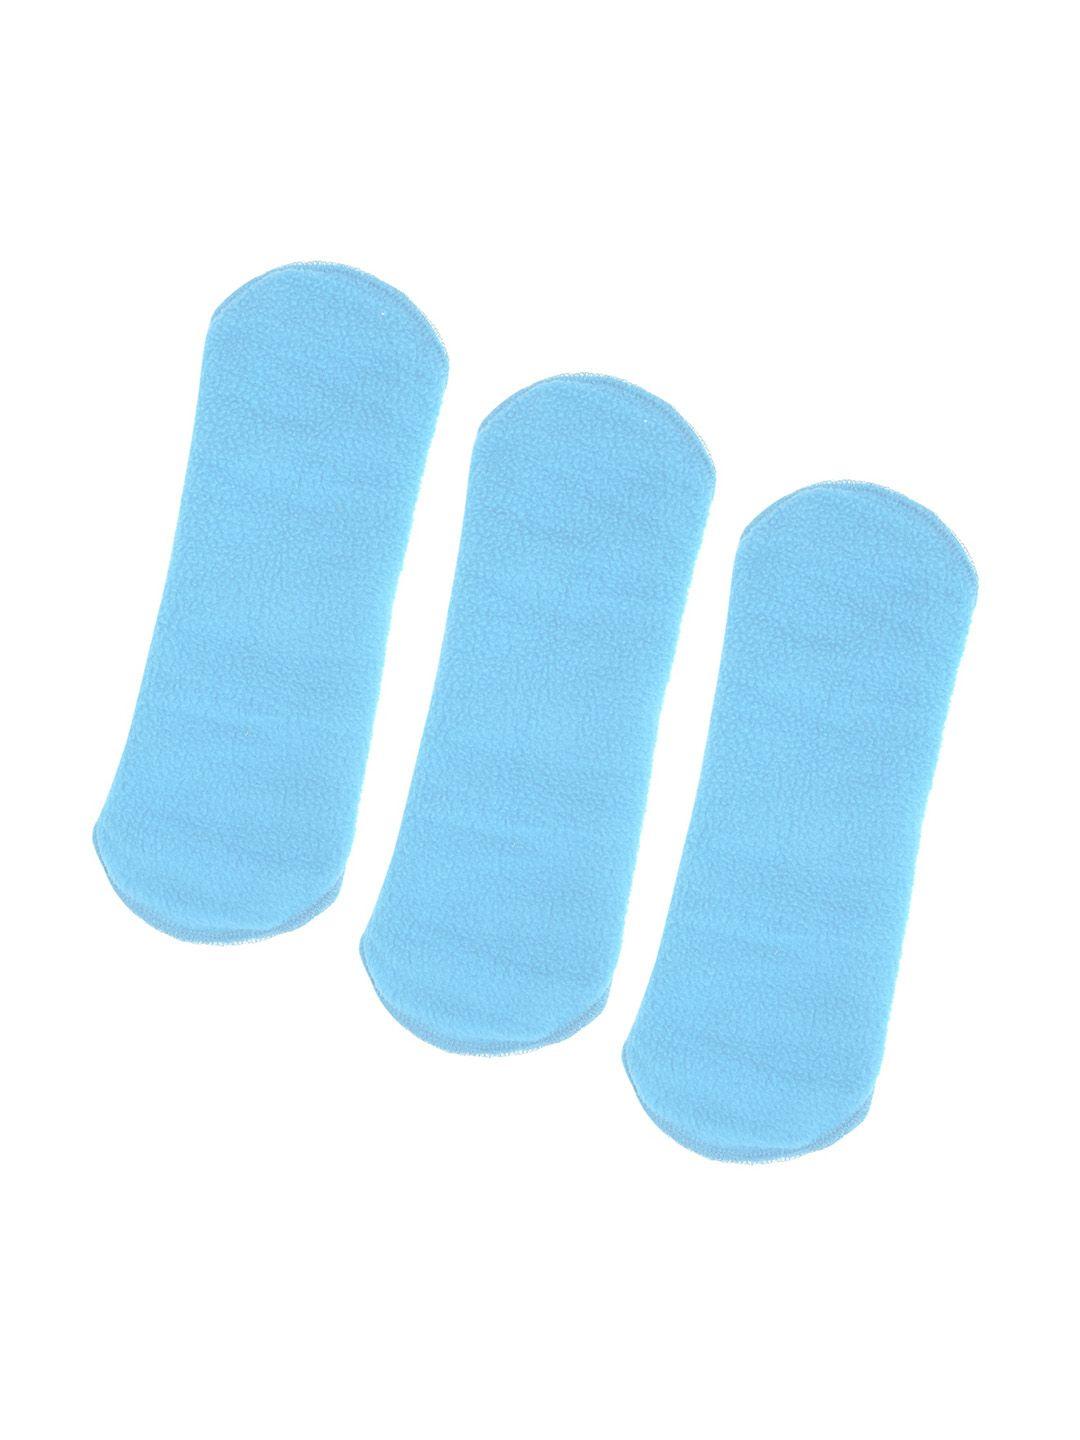 caredone set of 3 4-layered ultra thin rash free reusable sanitary cloth pads